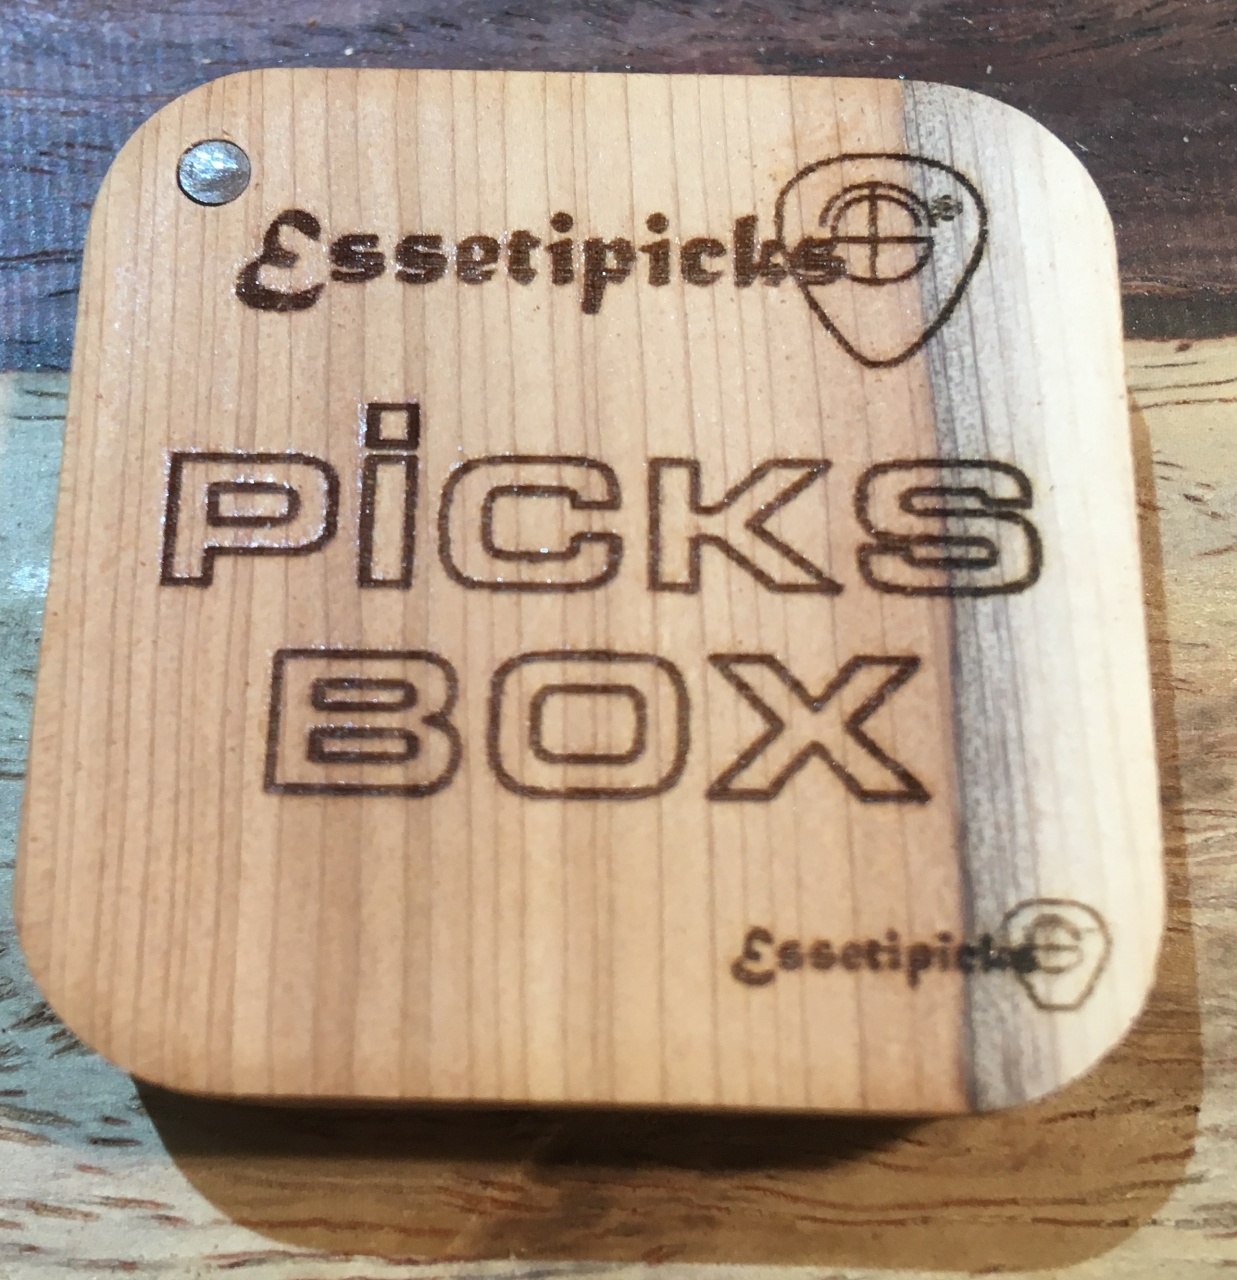 Picks Box